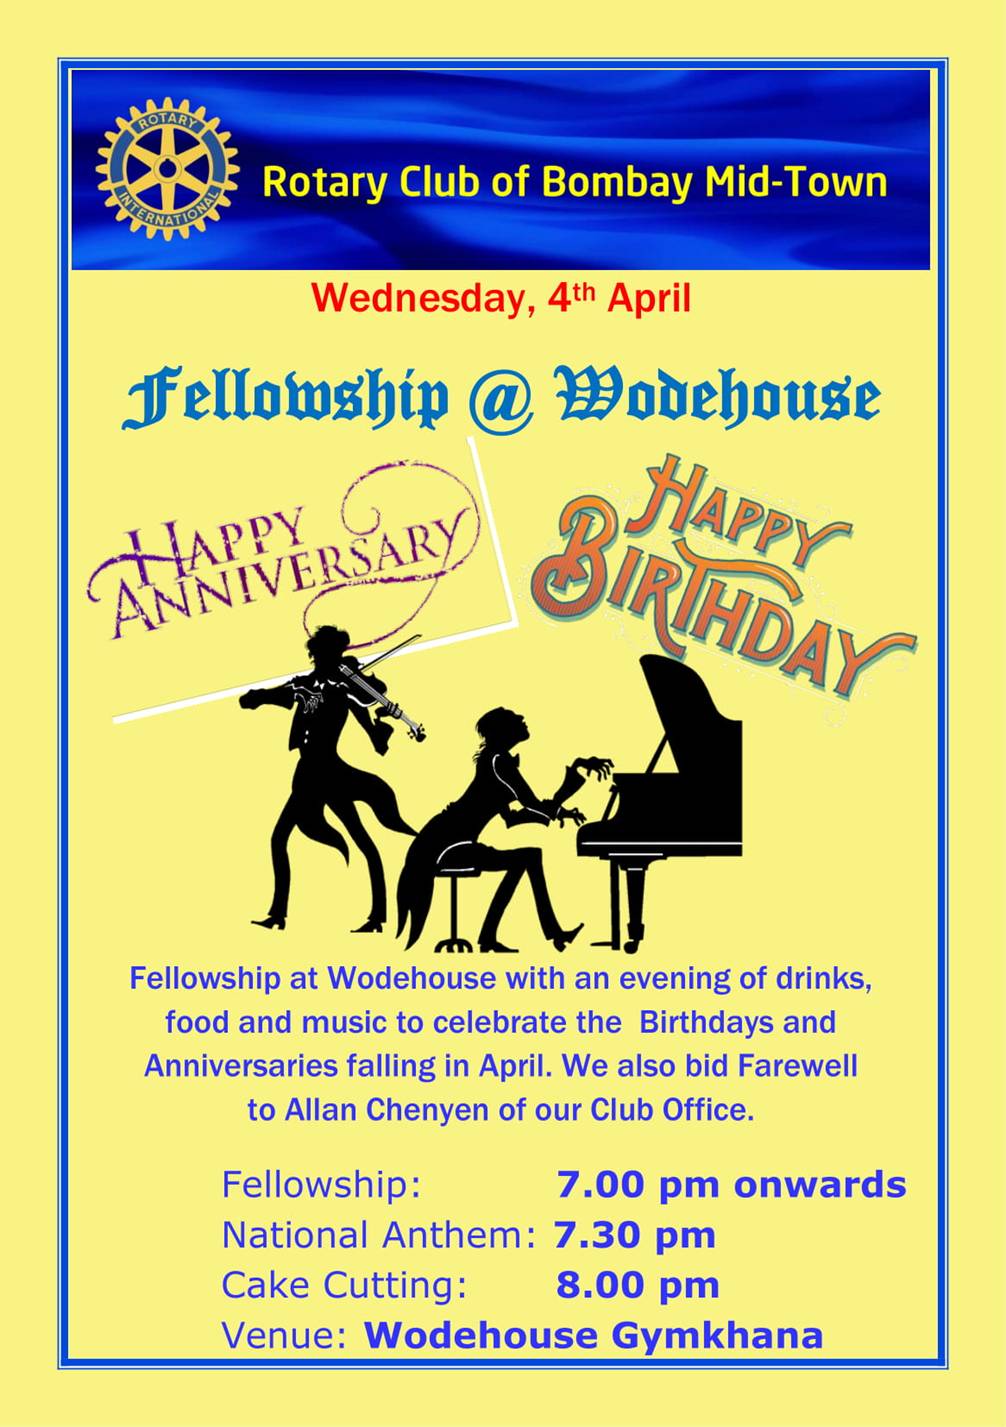 Fellowship at Wodehouse